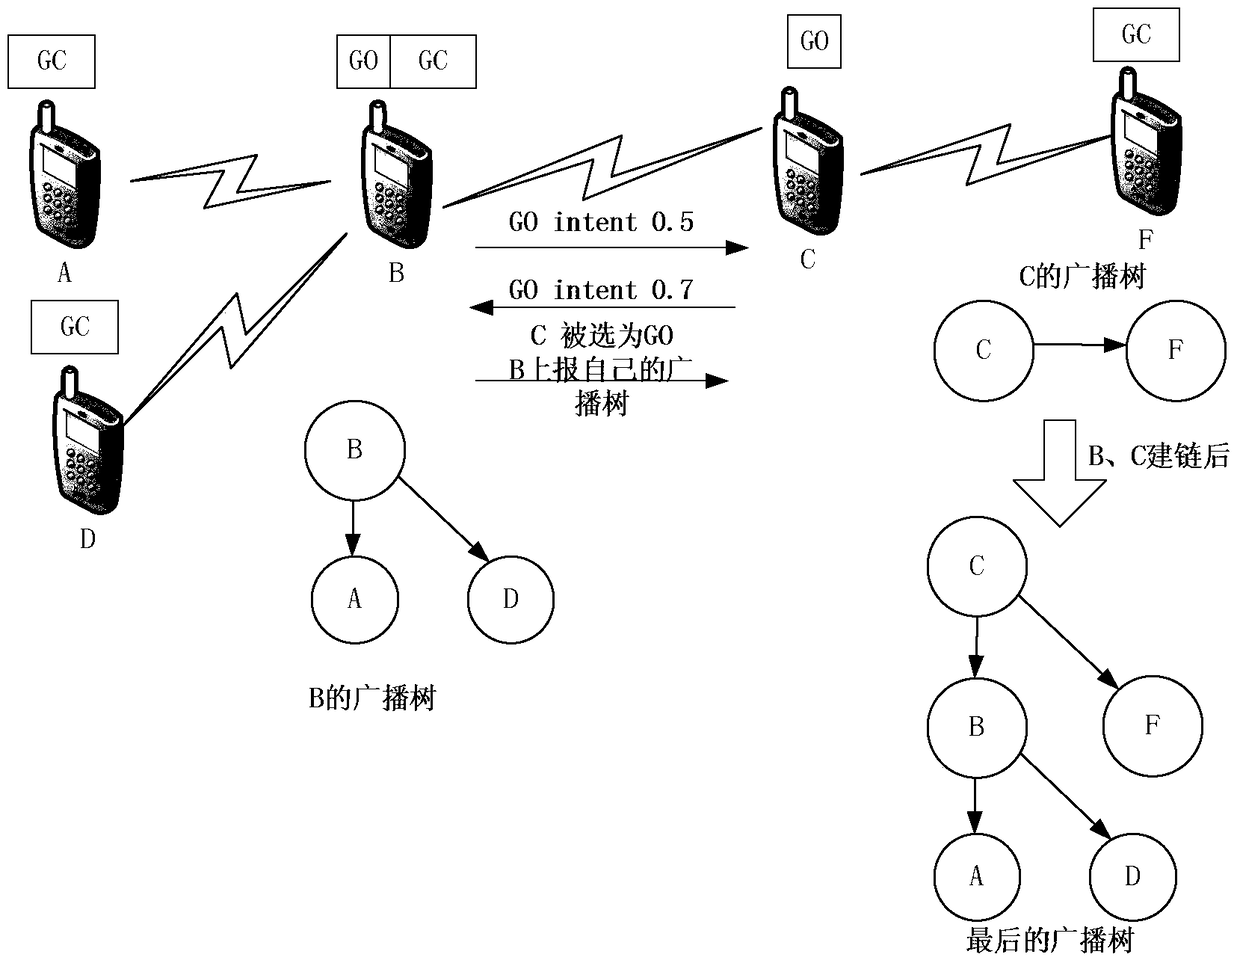 Establishment method of maximum coverage broadcast tree based on android WI-FI DIRECT mode